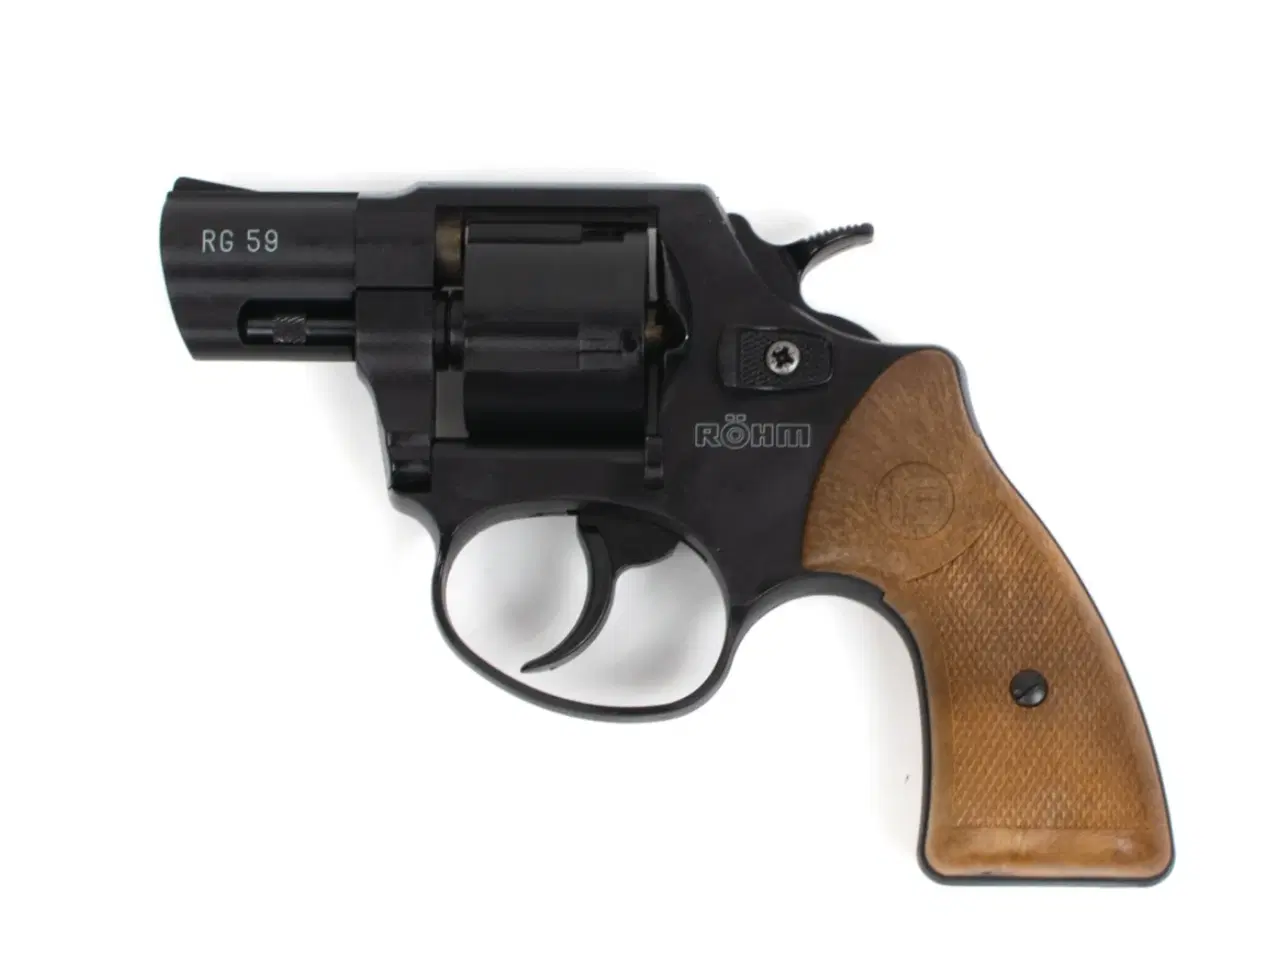 Billede 2 - 9mm pistol (signal)